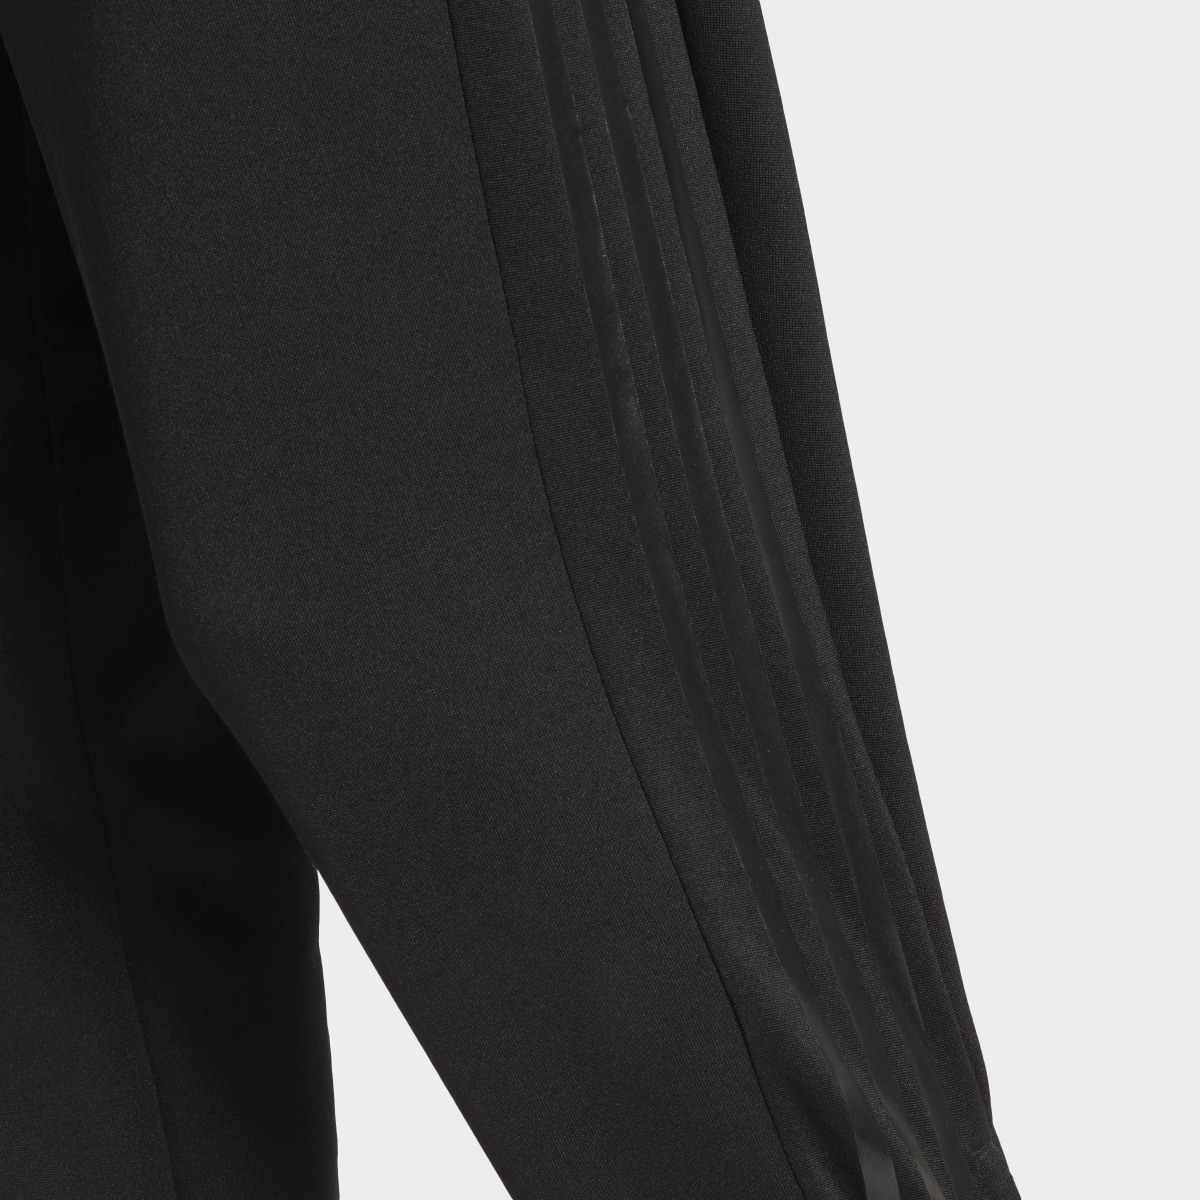 Adidas Pants Deportivos Tiro Suit-Up Advanced. 10